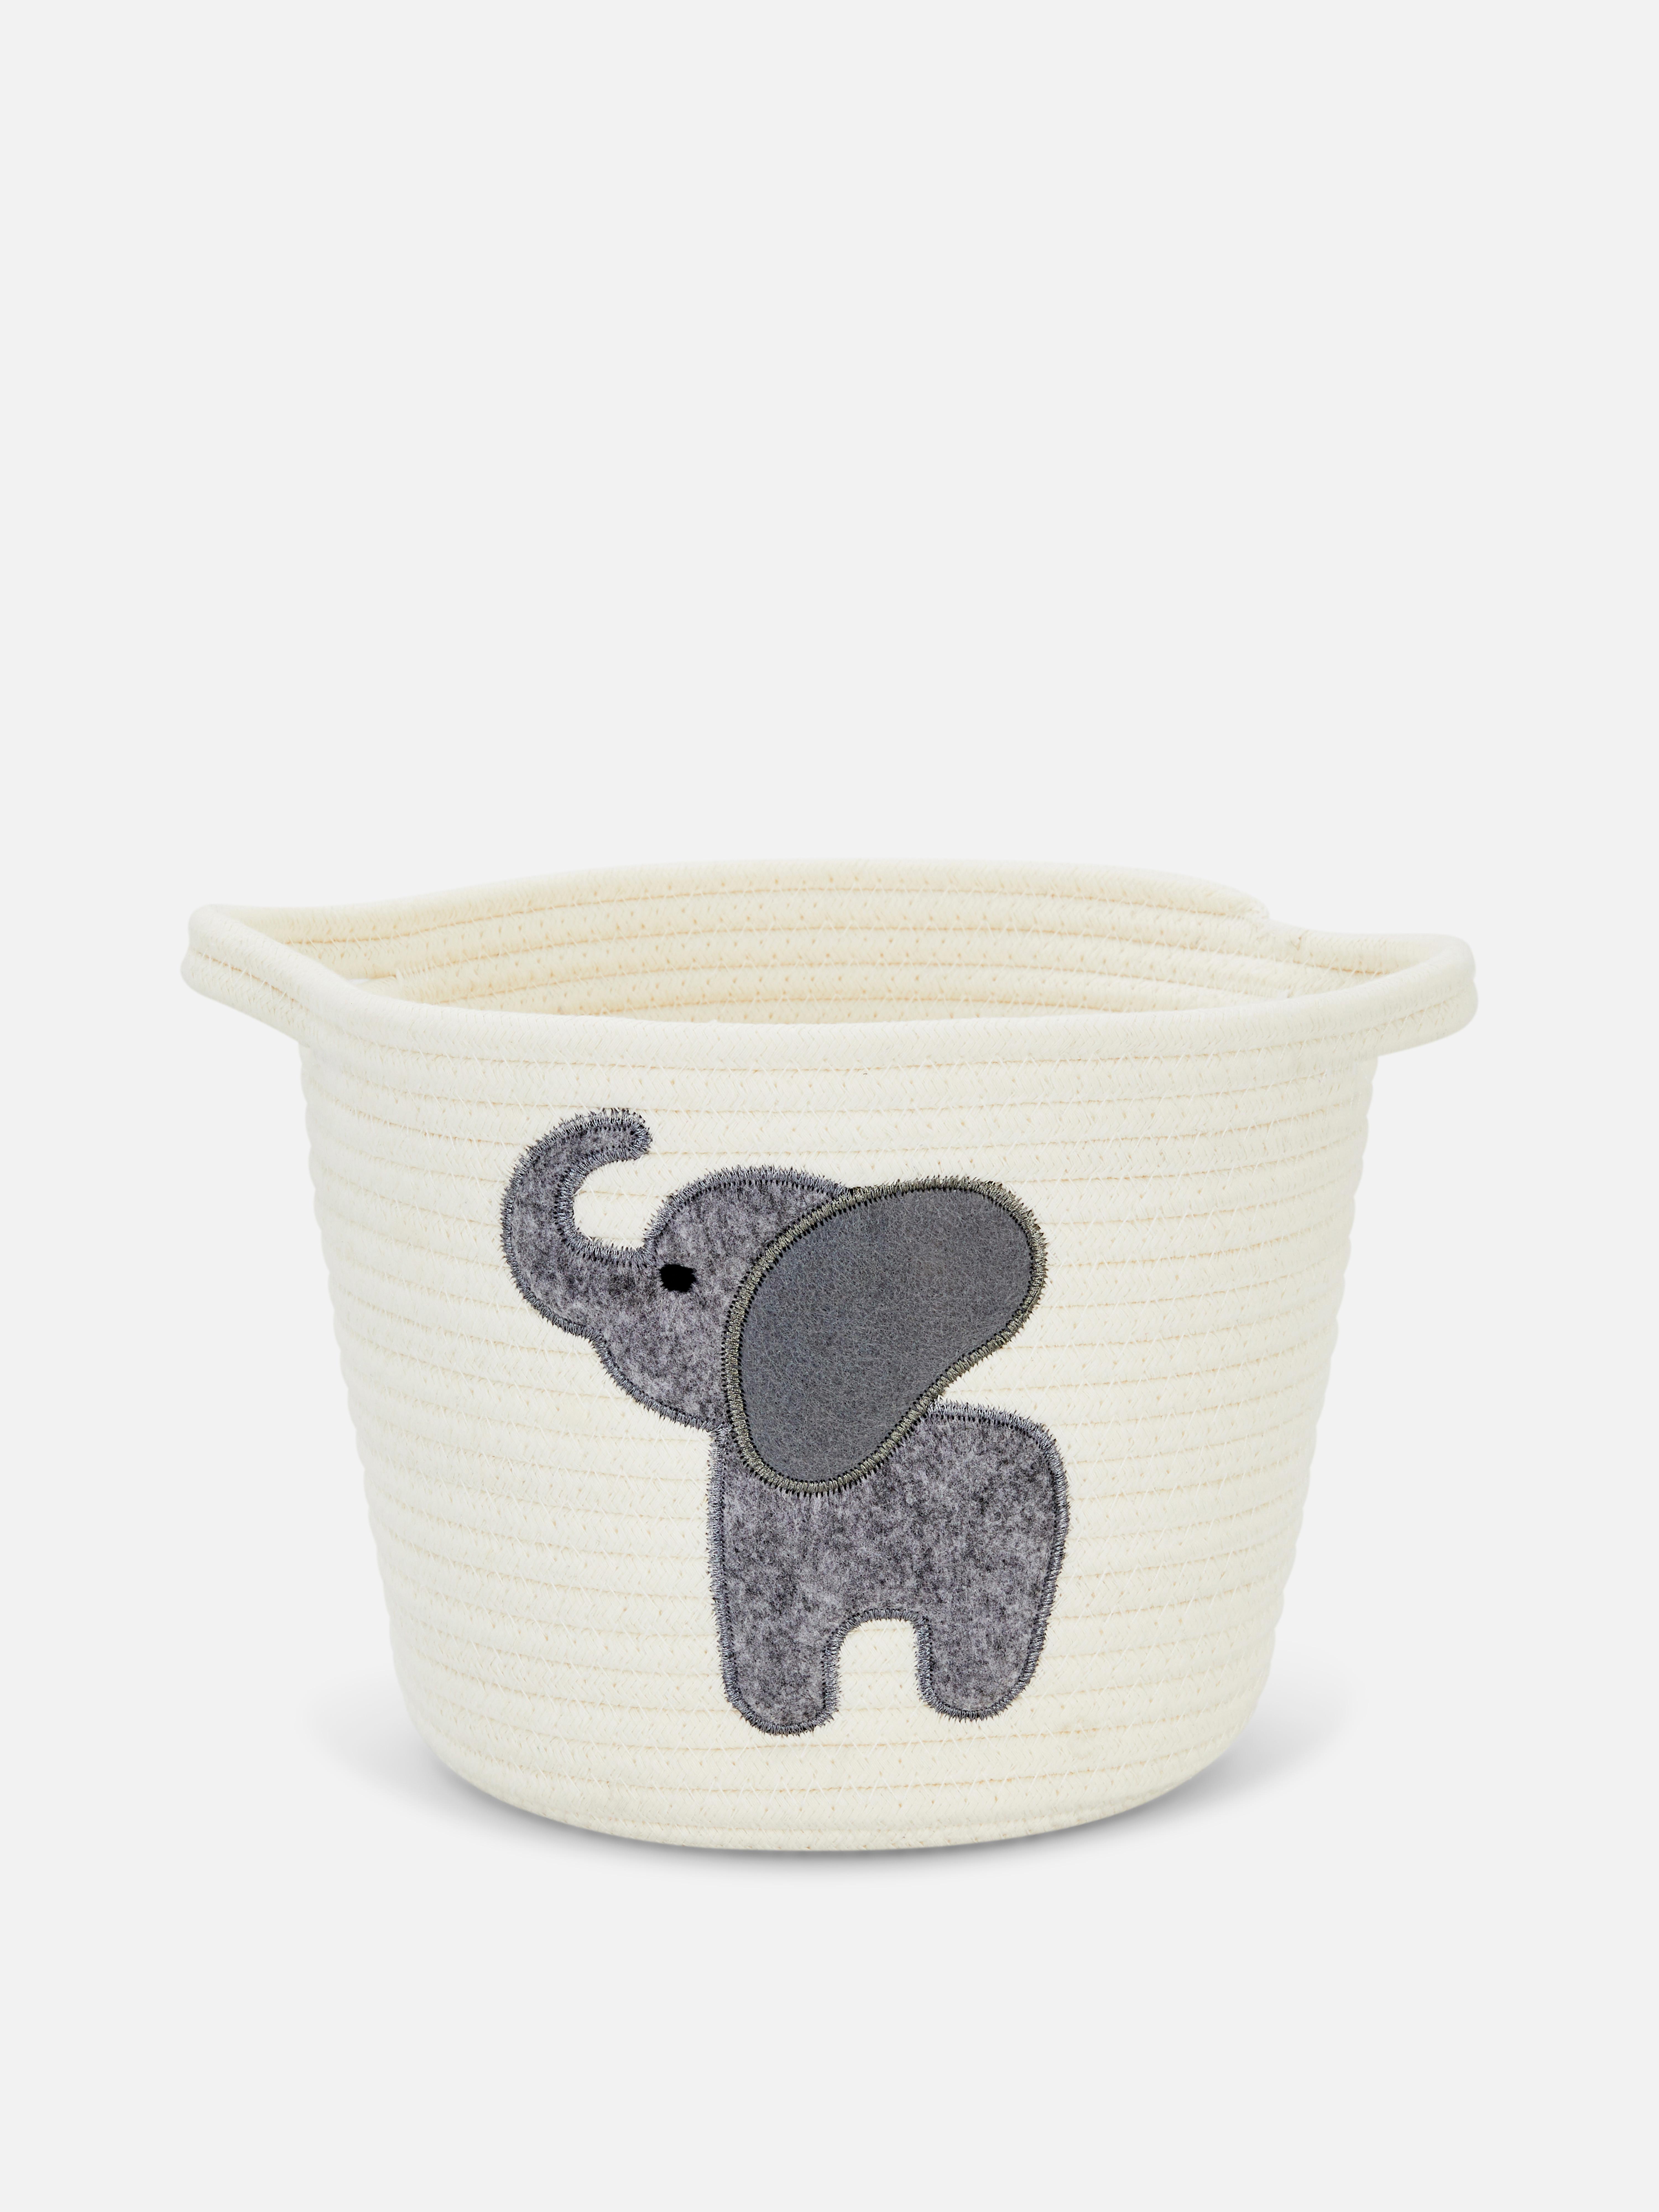 Elephant Woven Basket